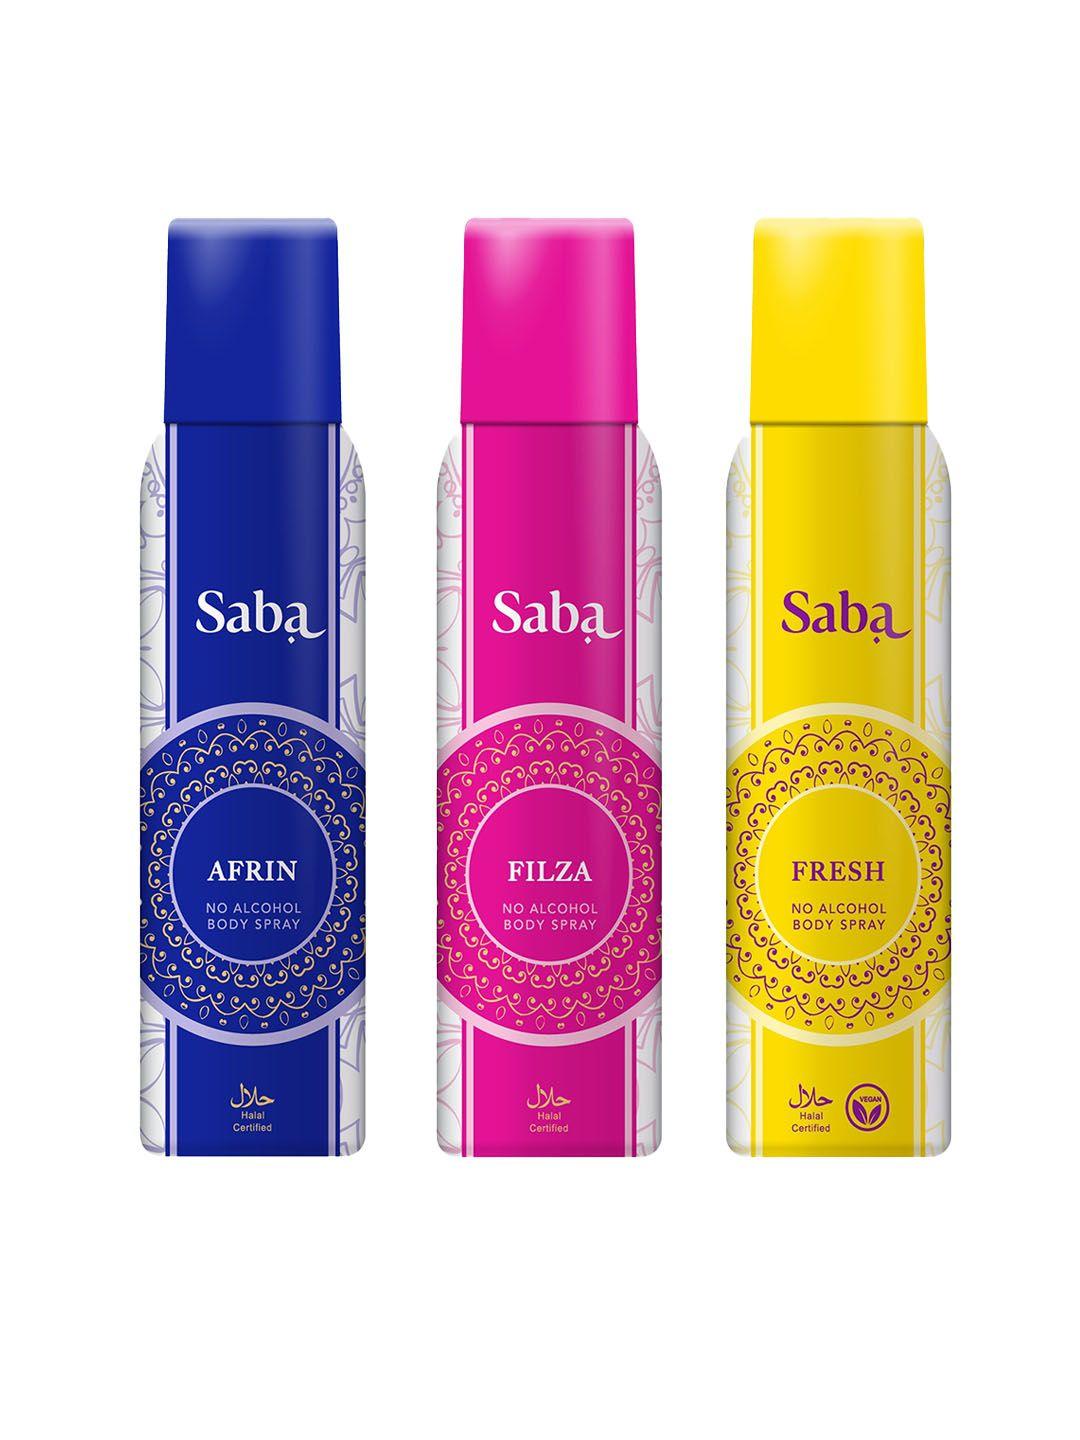 saba women set of afrin + filza + fresh no alcohol body spray - 150 ml each